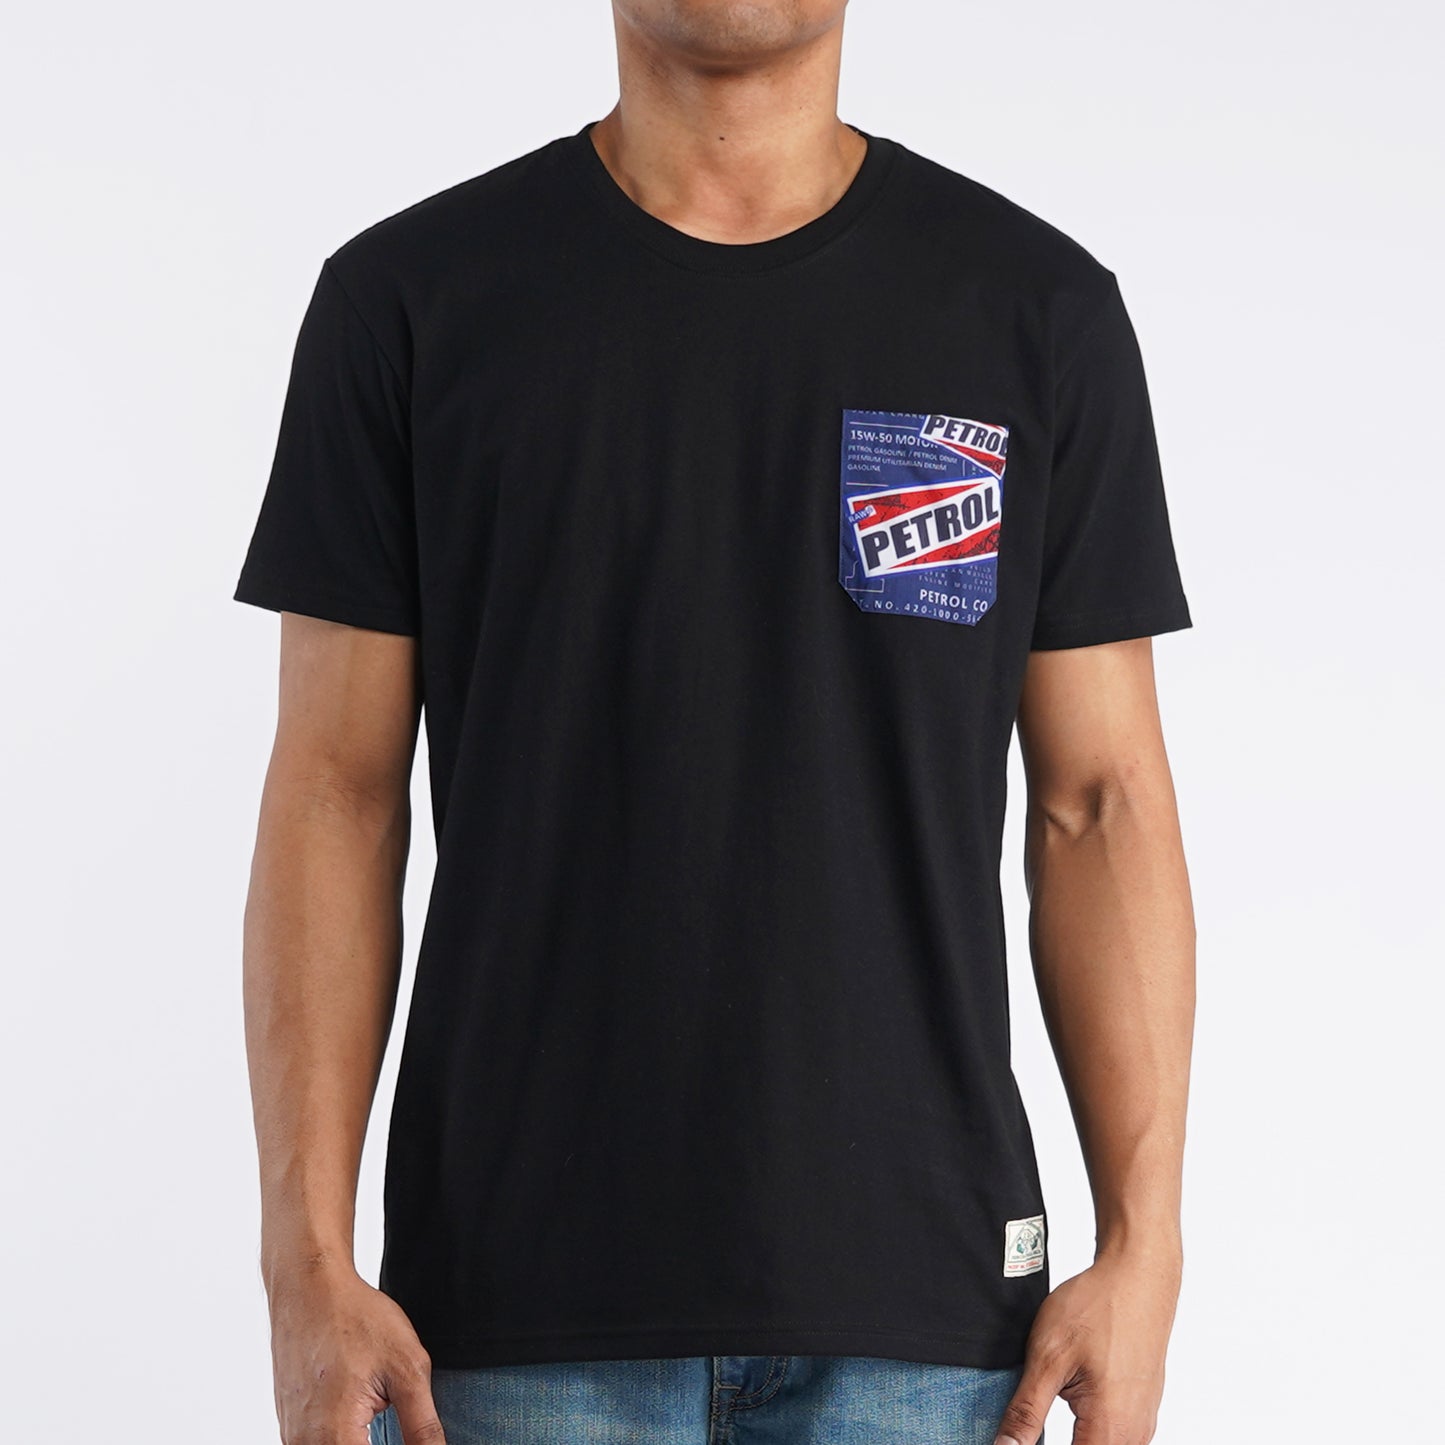 Petrol Basic Tees for Men Slim Fitting Trendy fashion Casual Top Black T-shirt for Men 115554 (Black)